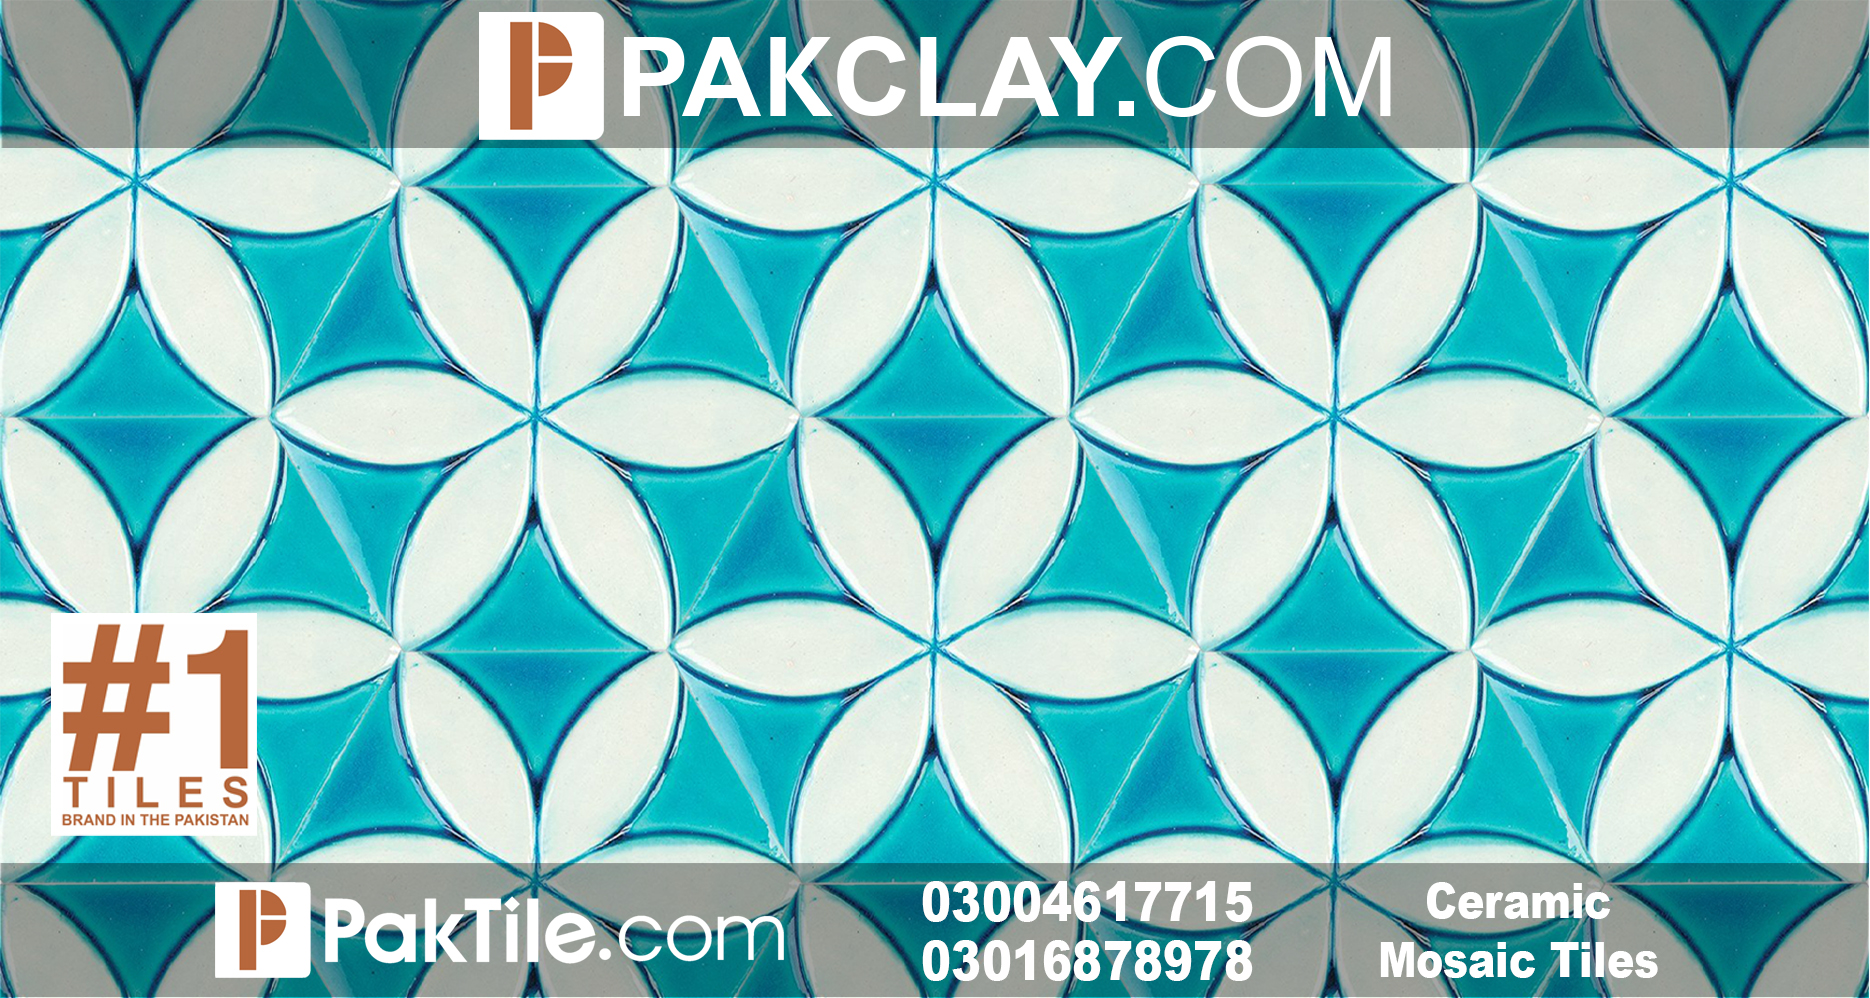 Ceramic Tiles Factory in Pakistan